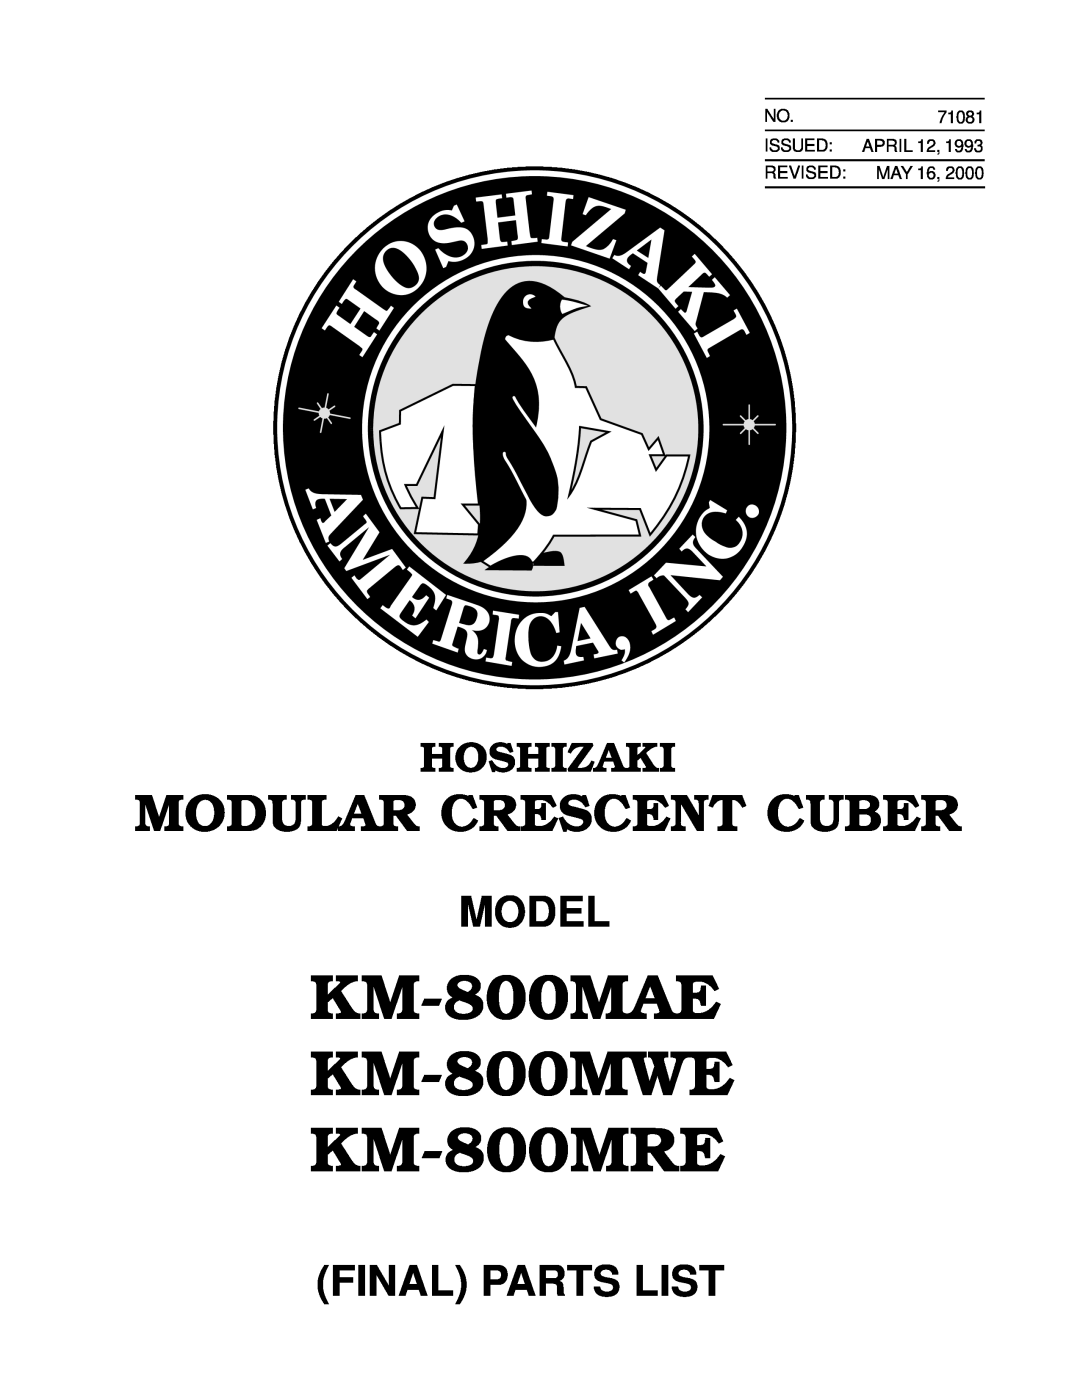 Hoshizaki manual KM-800MAE KM-800MWE KM-800MRE, Modular Crescent Cuber, Hoshizaki, Model, Final Parts List 